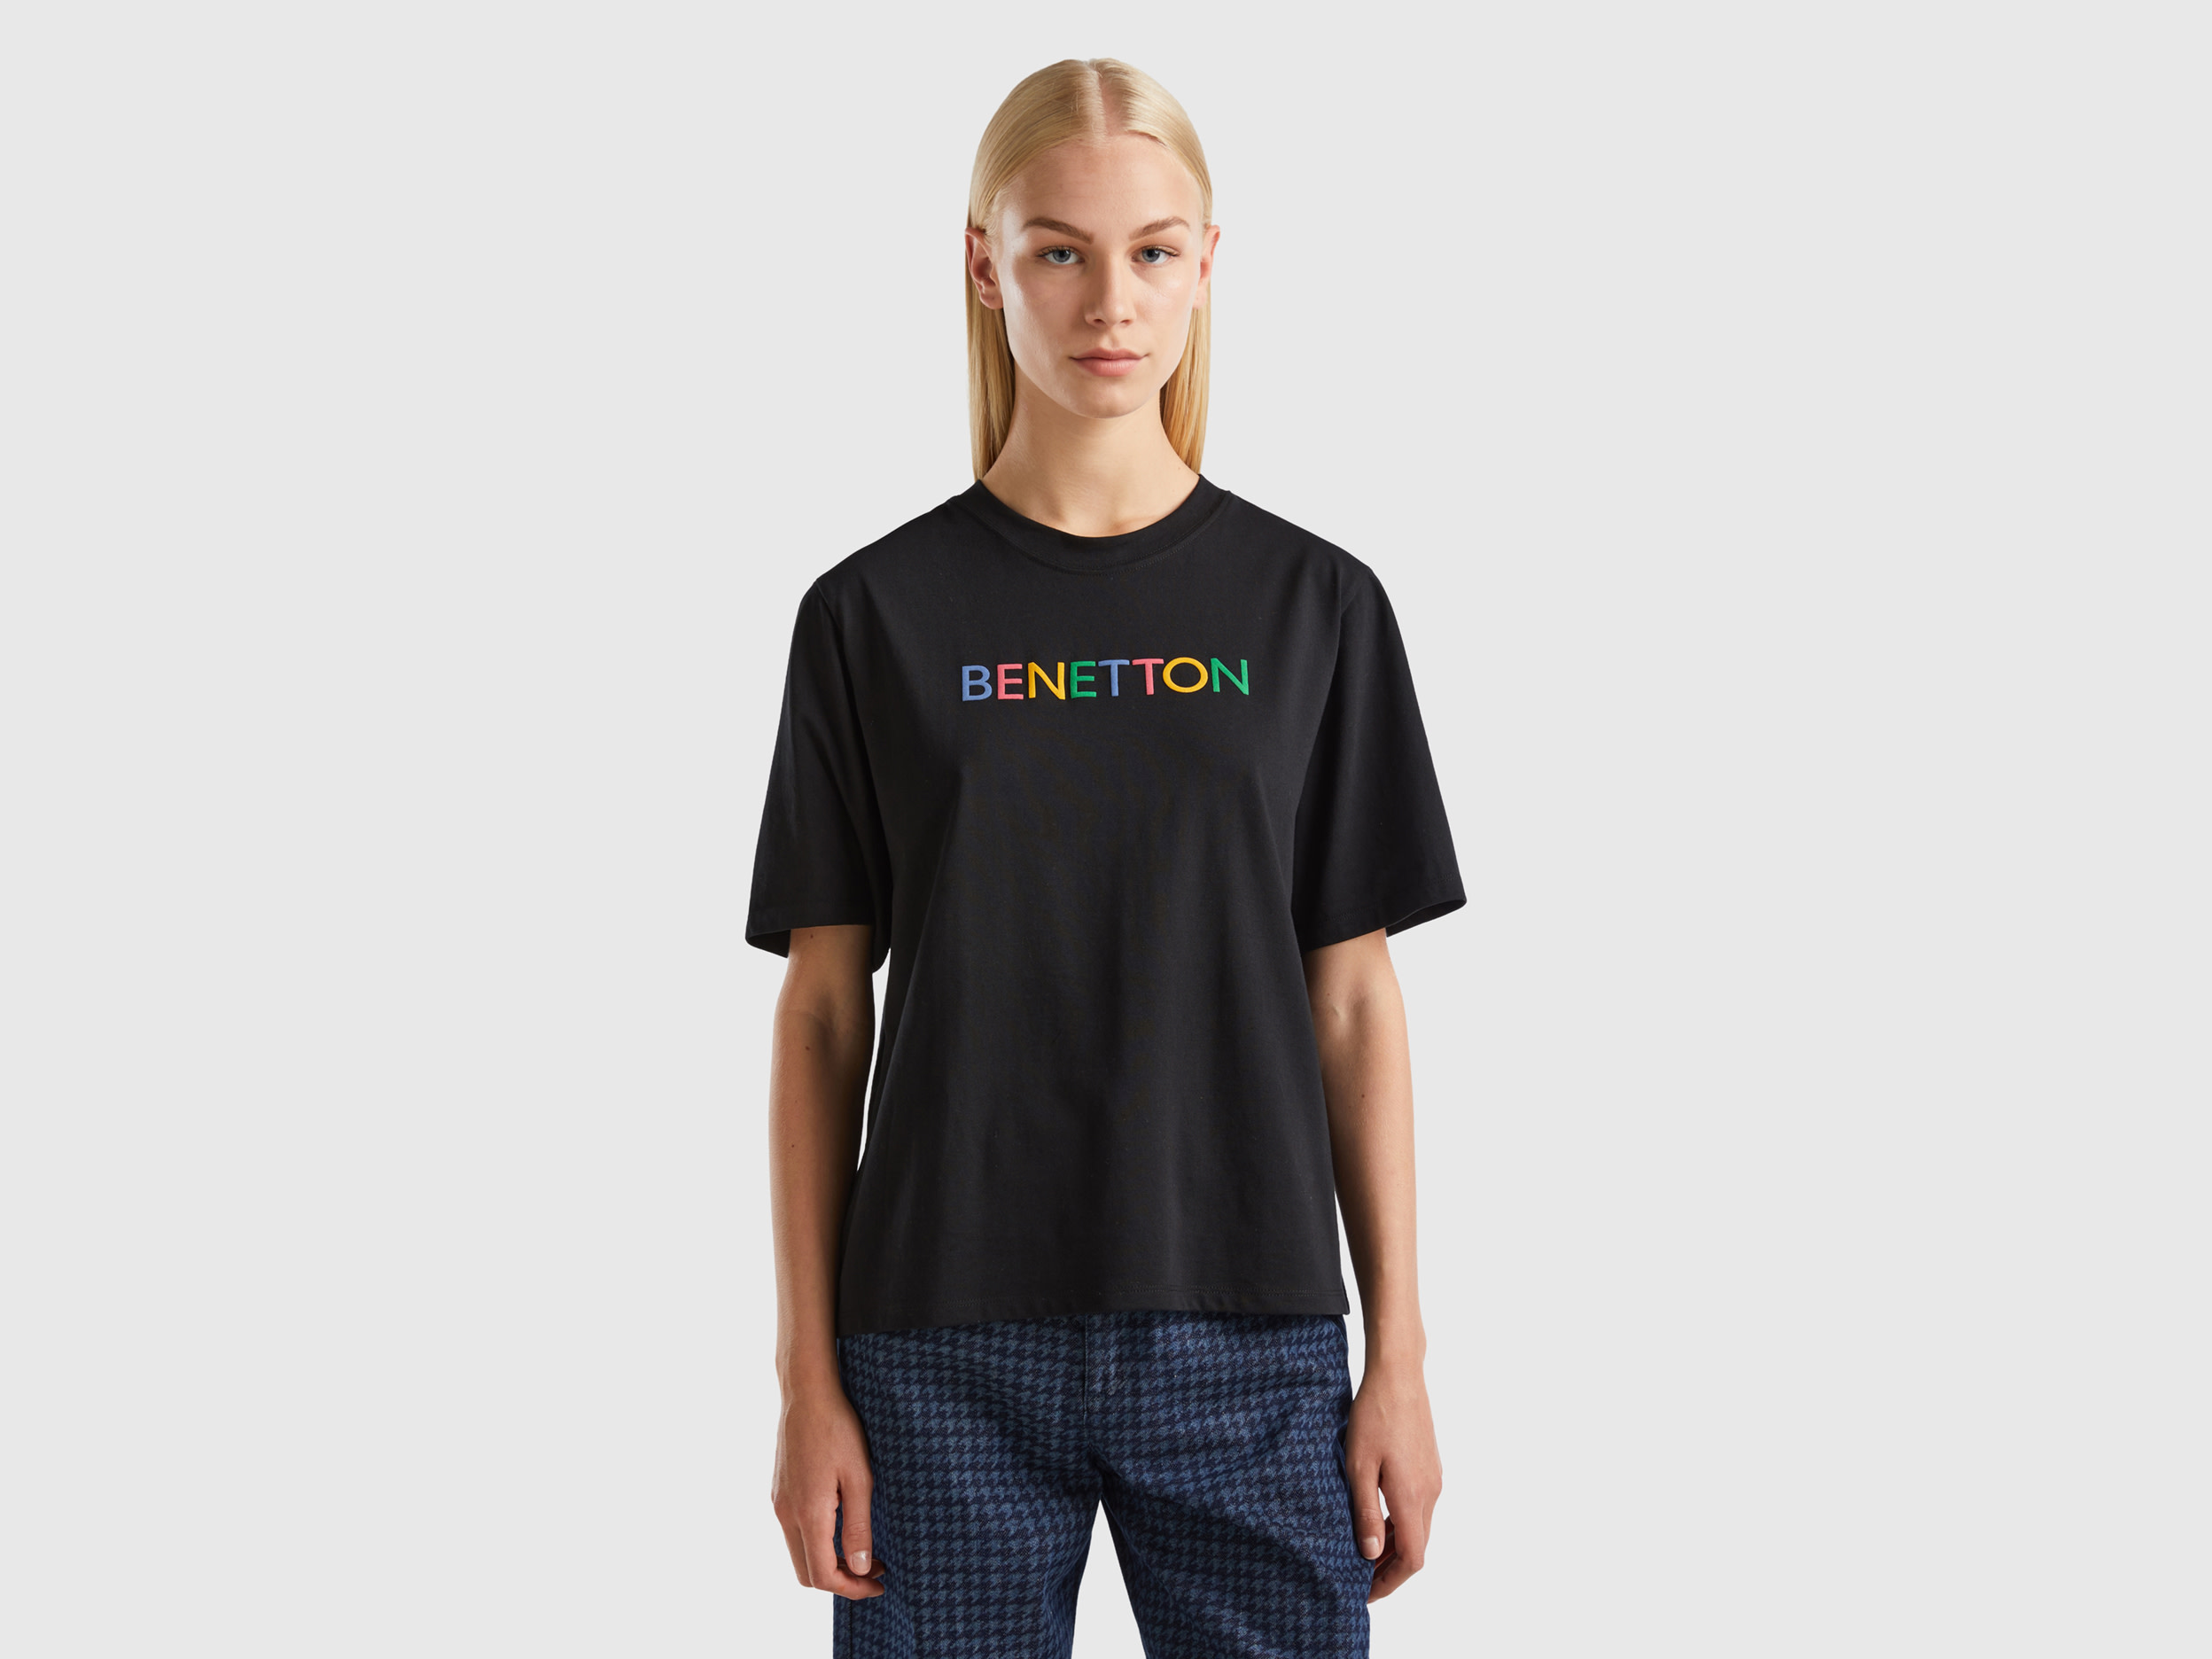 Benetton, T-shirt With Logo Text, size XS, Black, Women